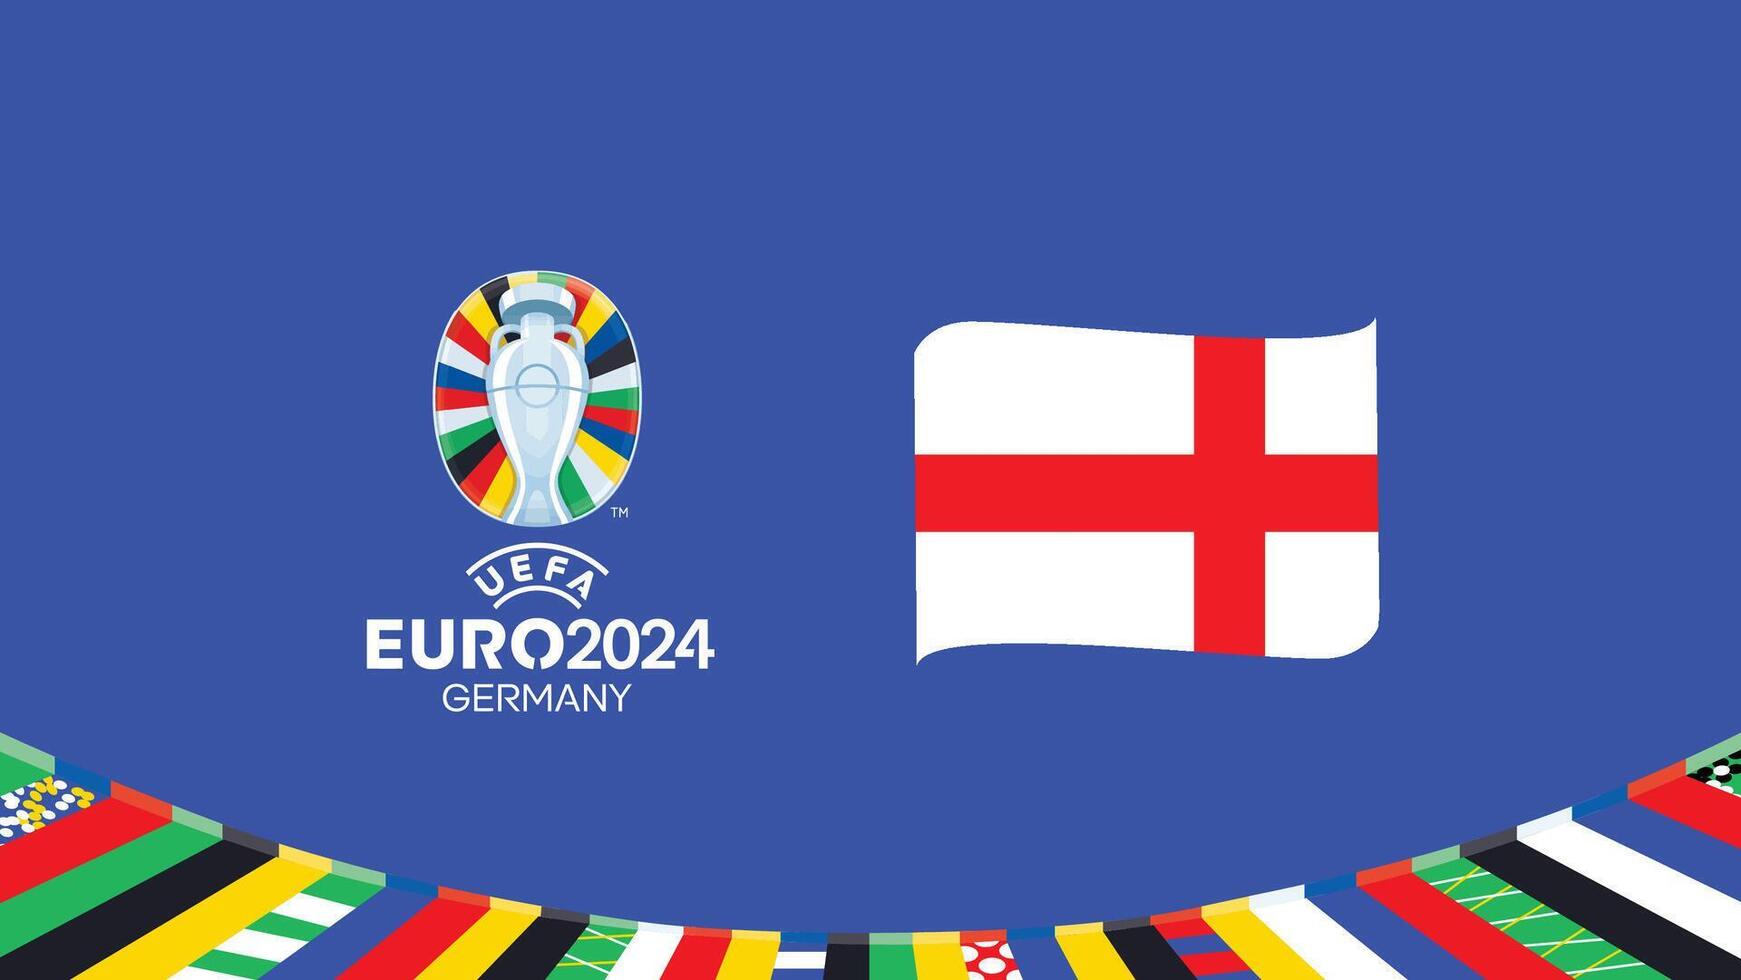 euro 2024 Inglaterra bandera cinta equipos diseño con oficial símbolo logo resumen países europeo fútbol americano ilustración vector